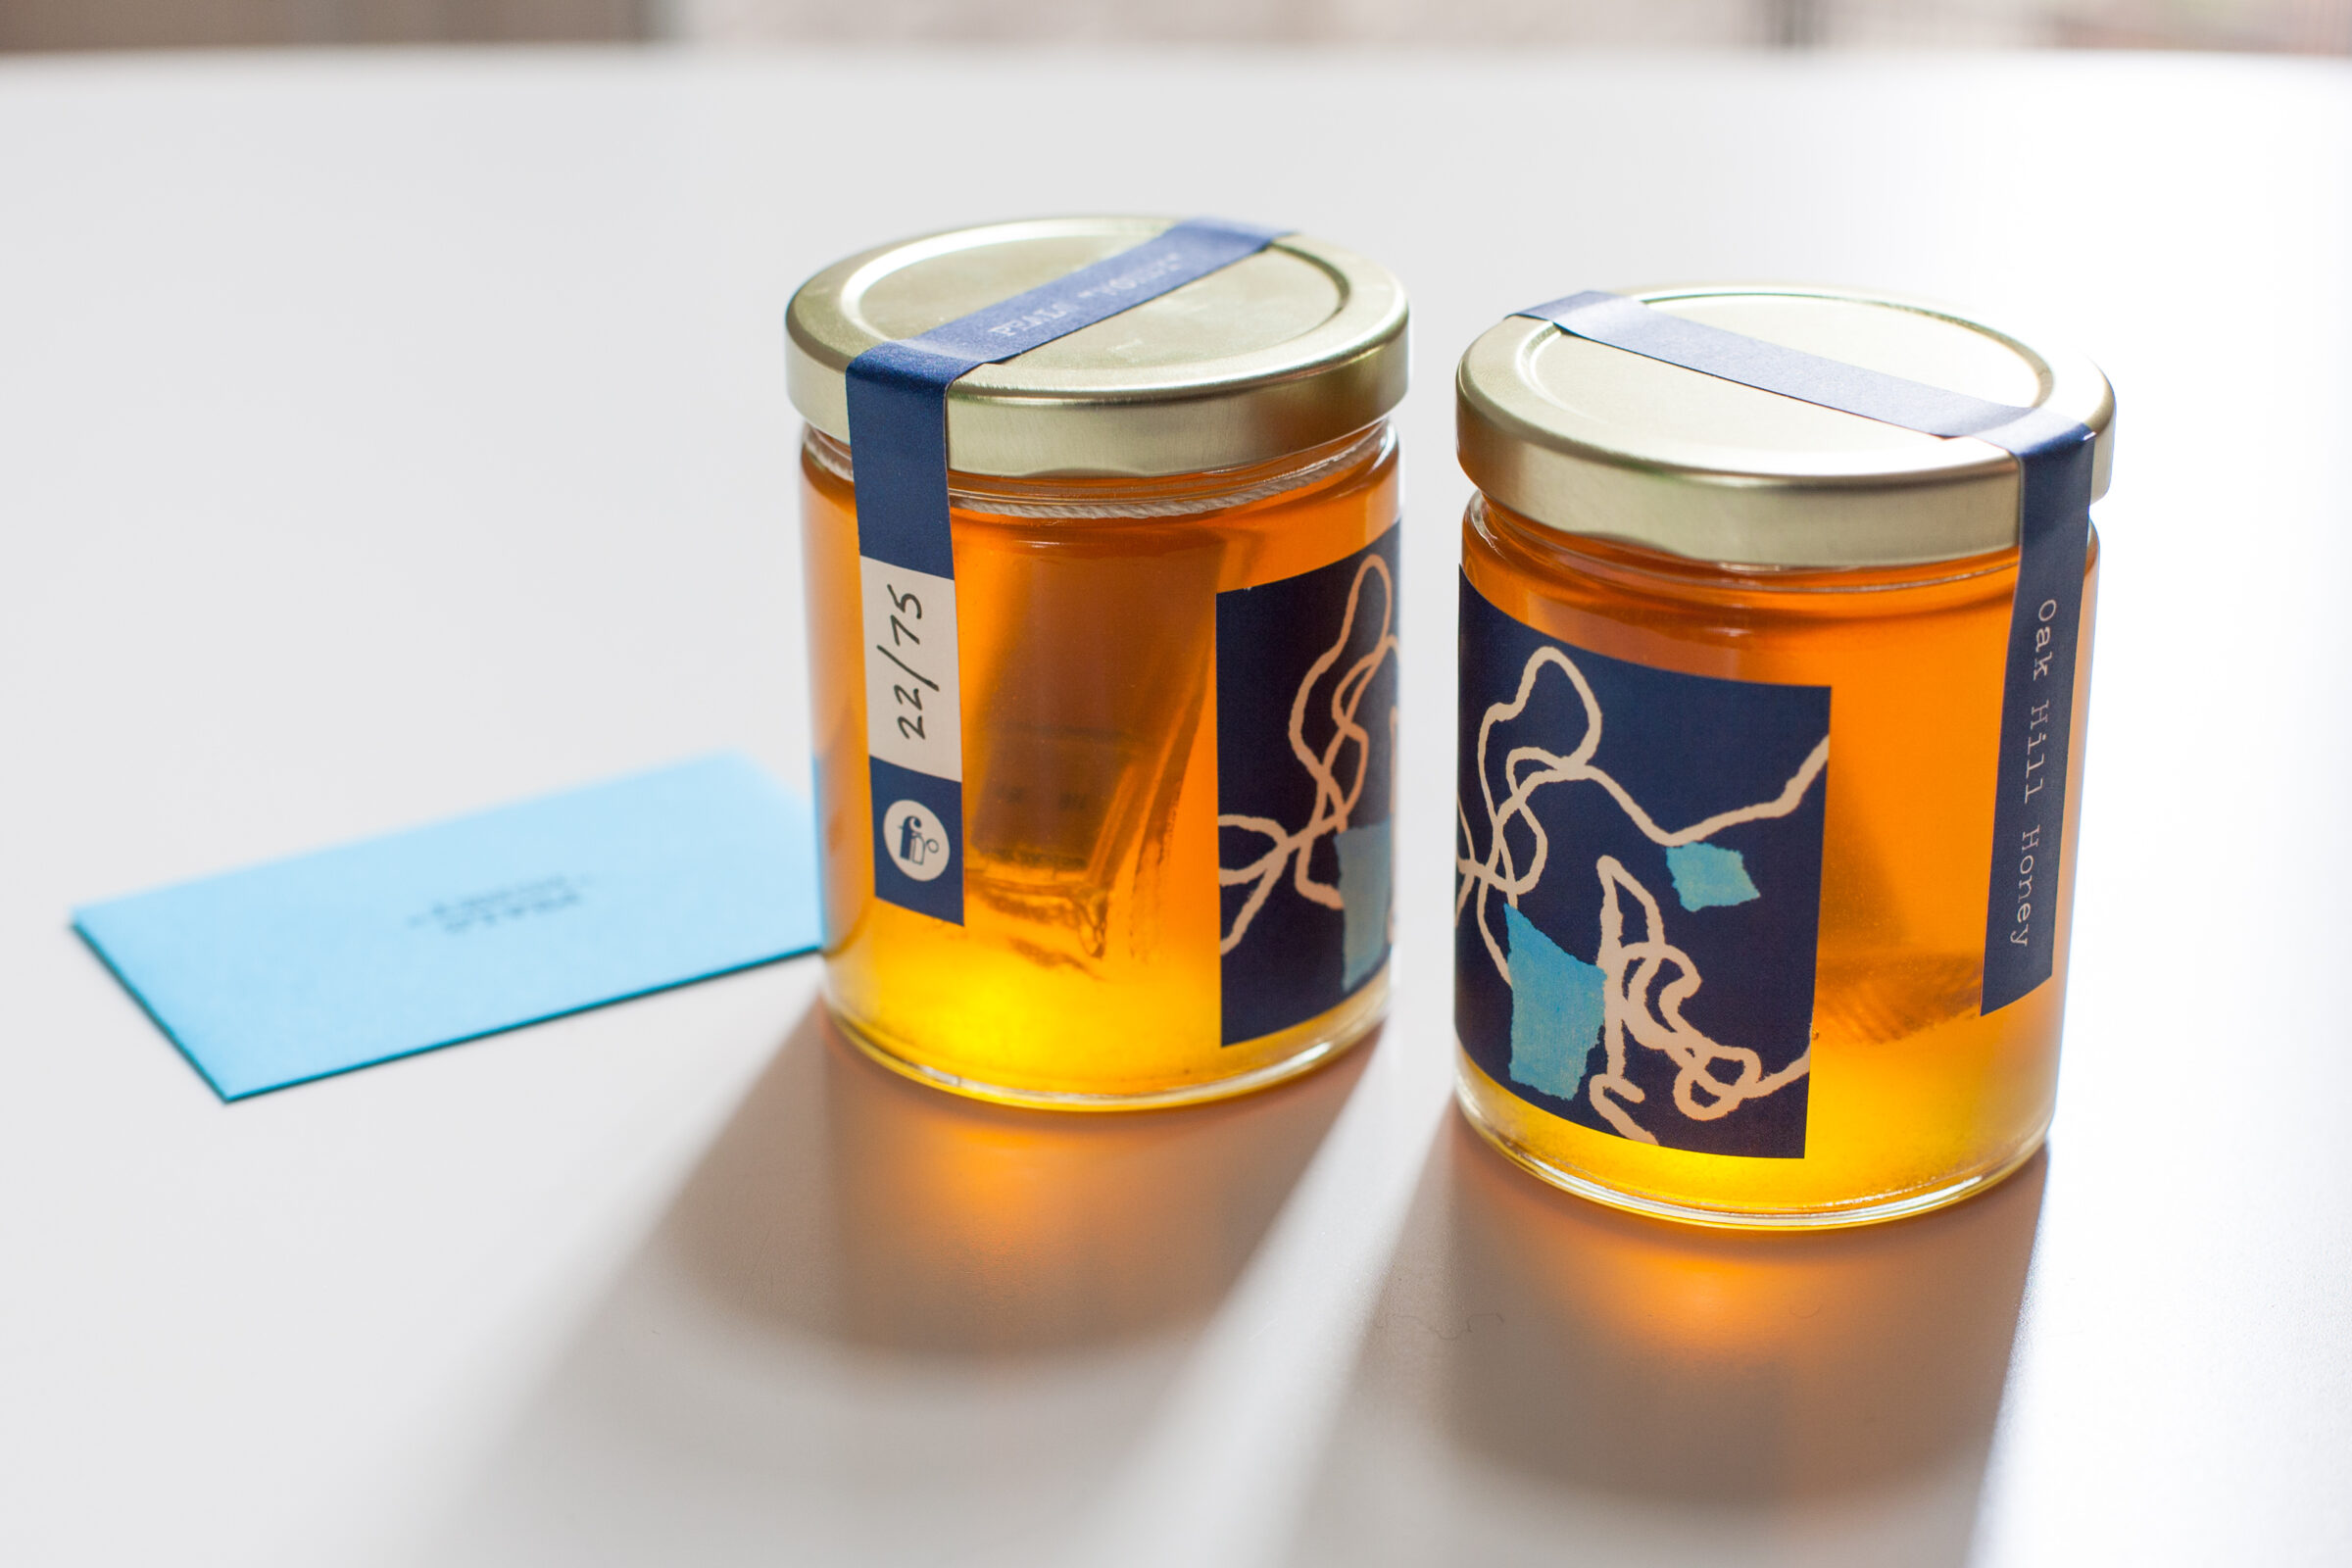 Limited edition honey jars with submerged USB sticks